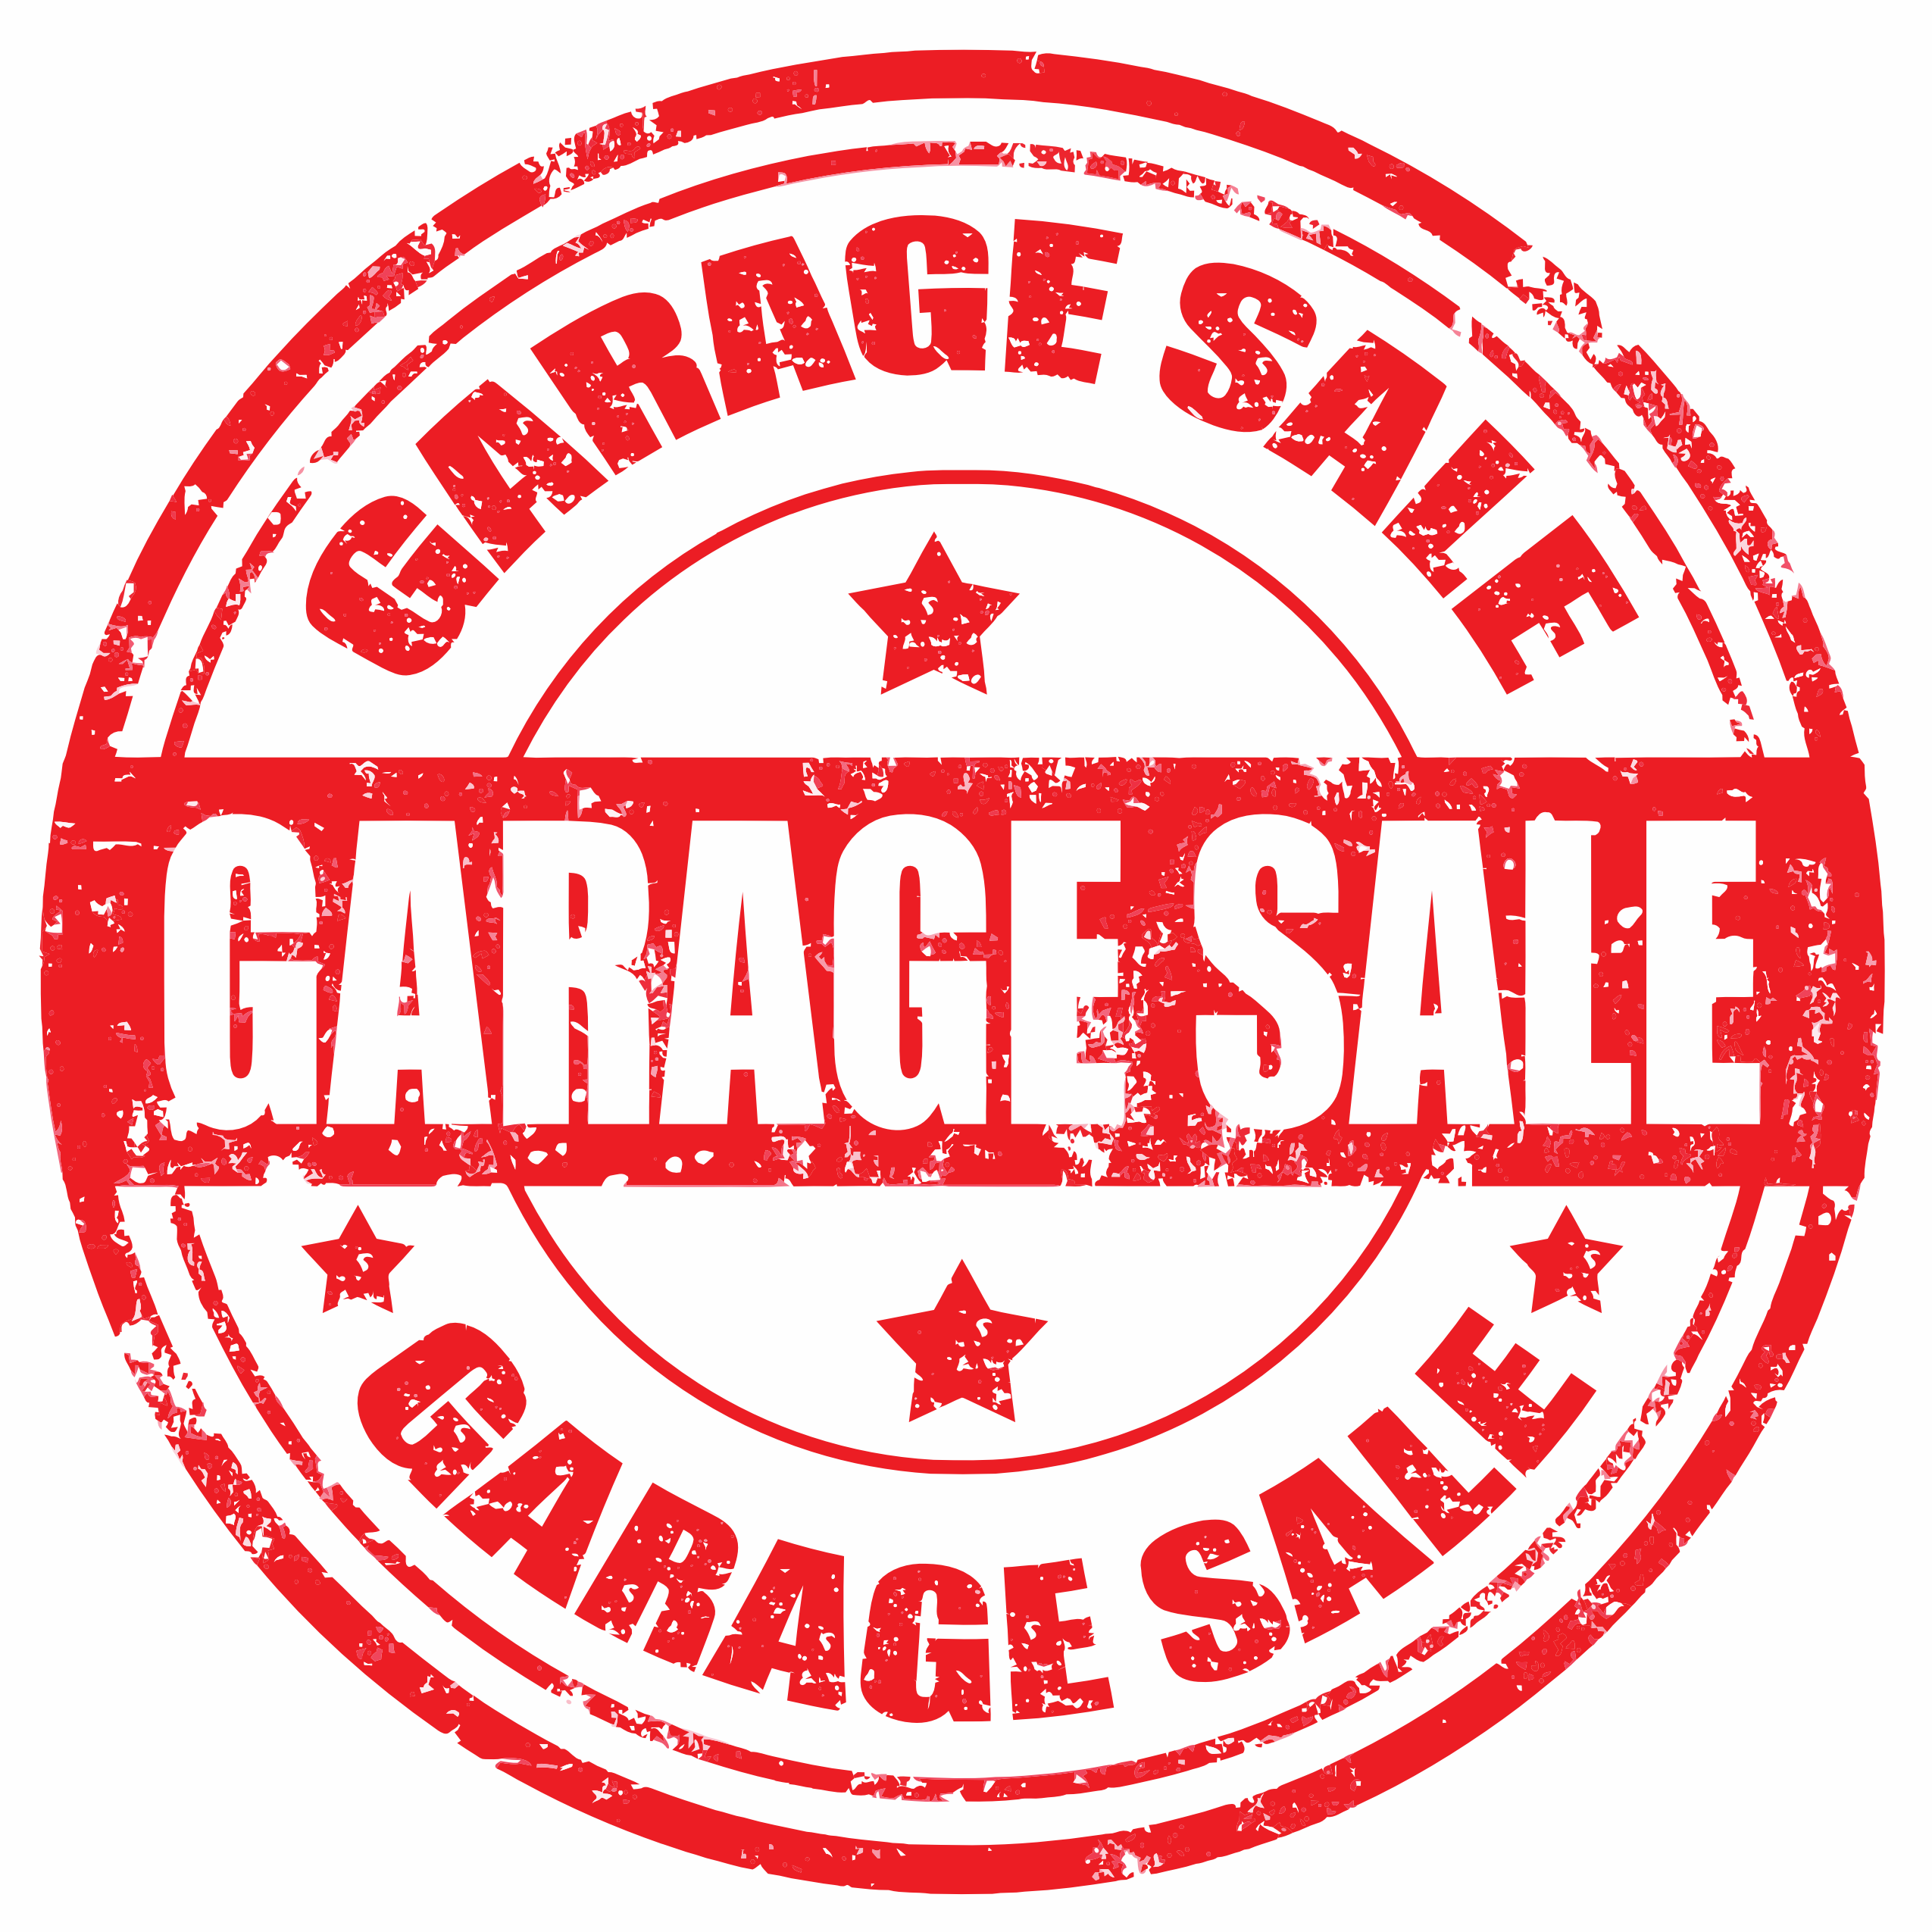 garage-sale.png